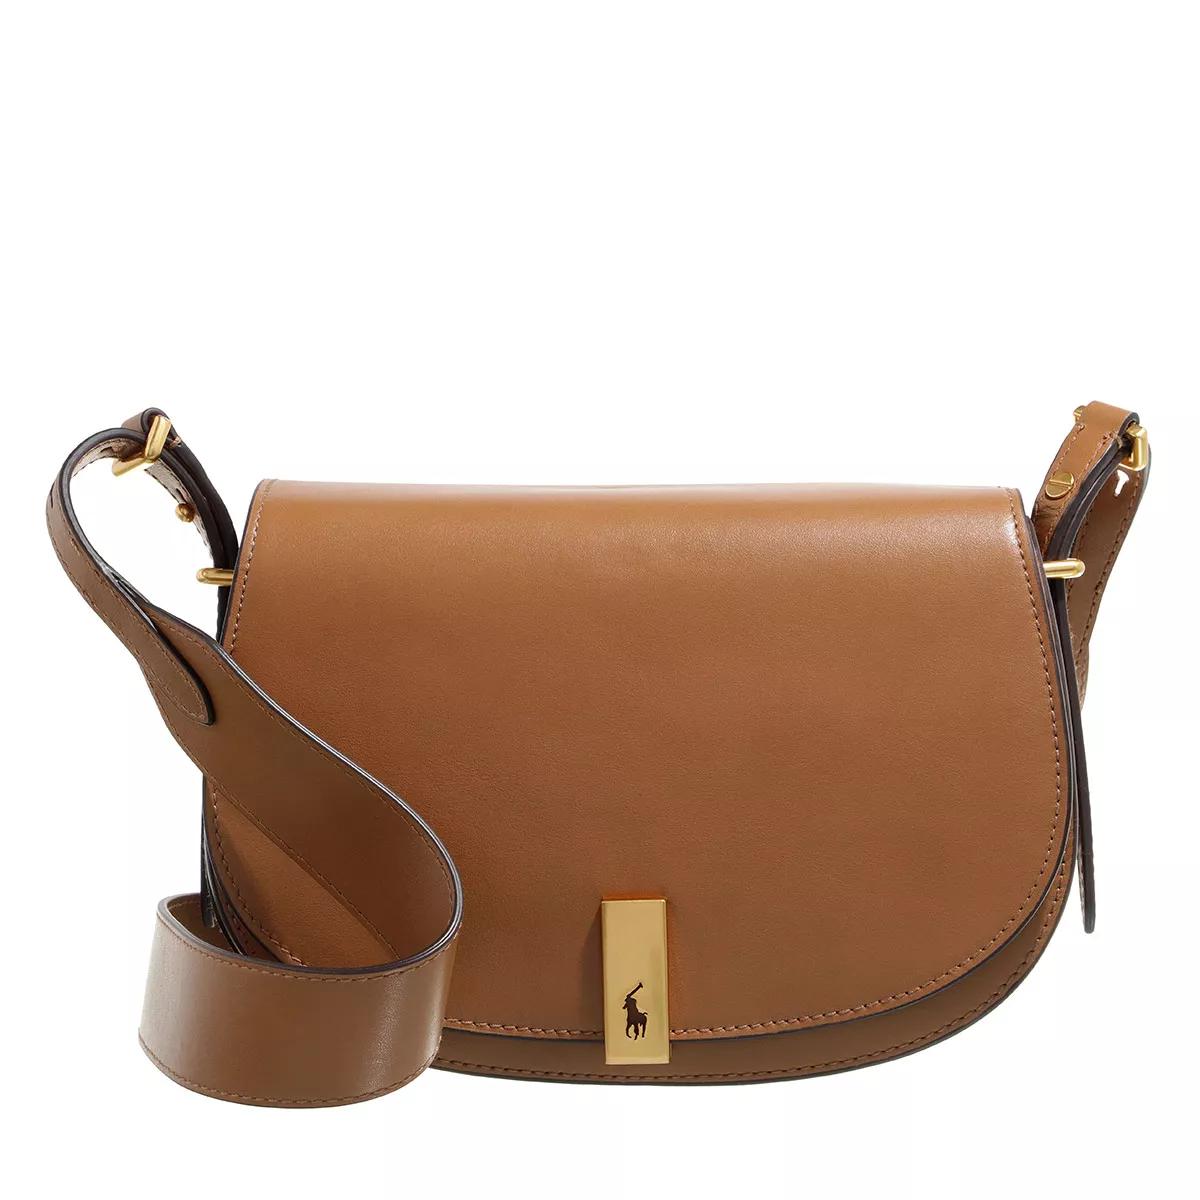 Top saddle bags and why we love saddle handbags